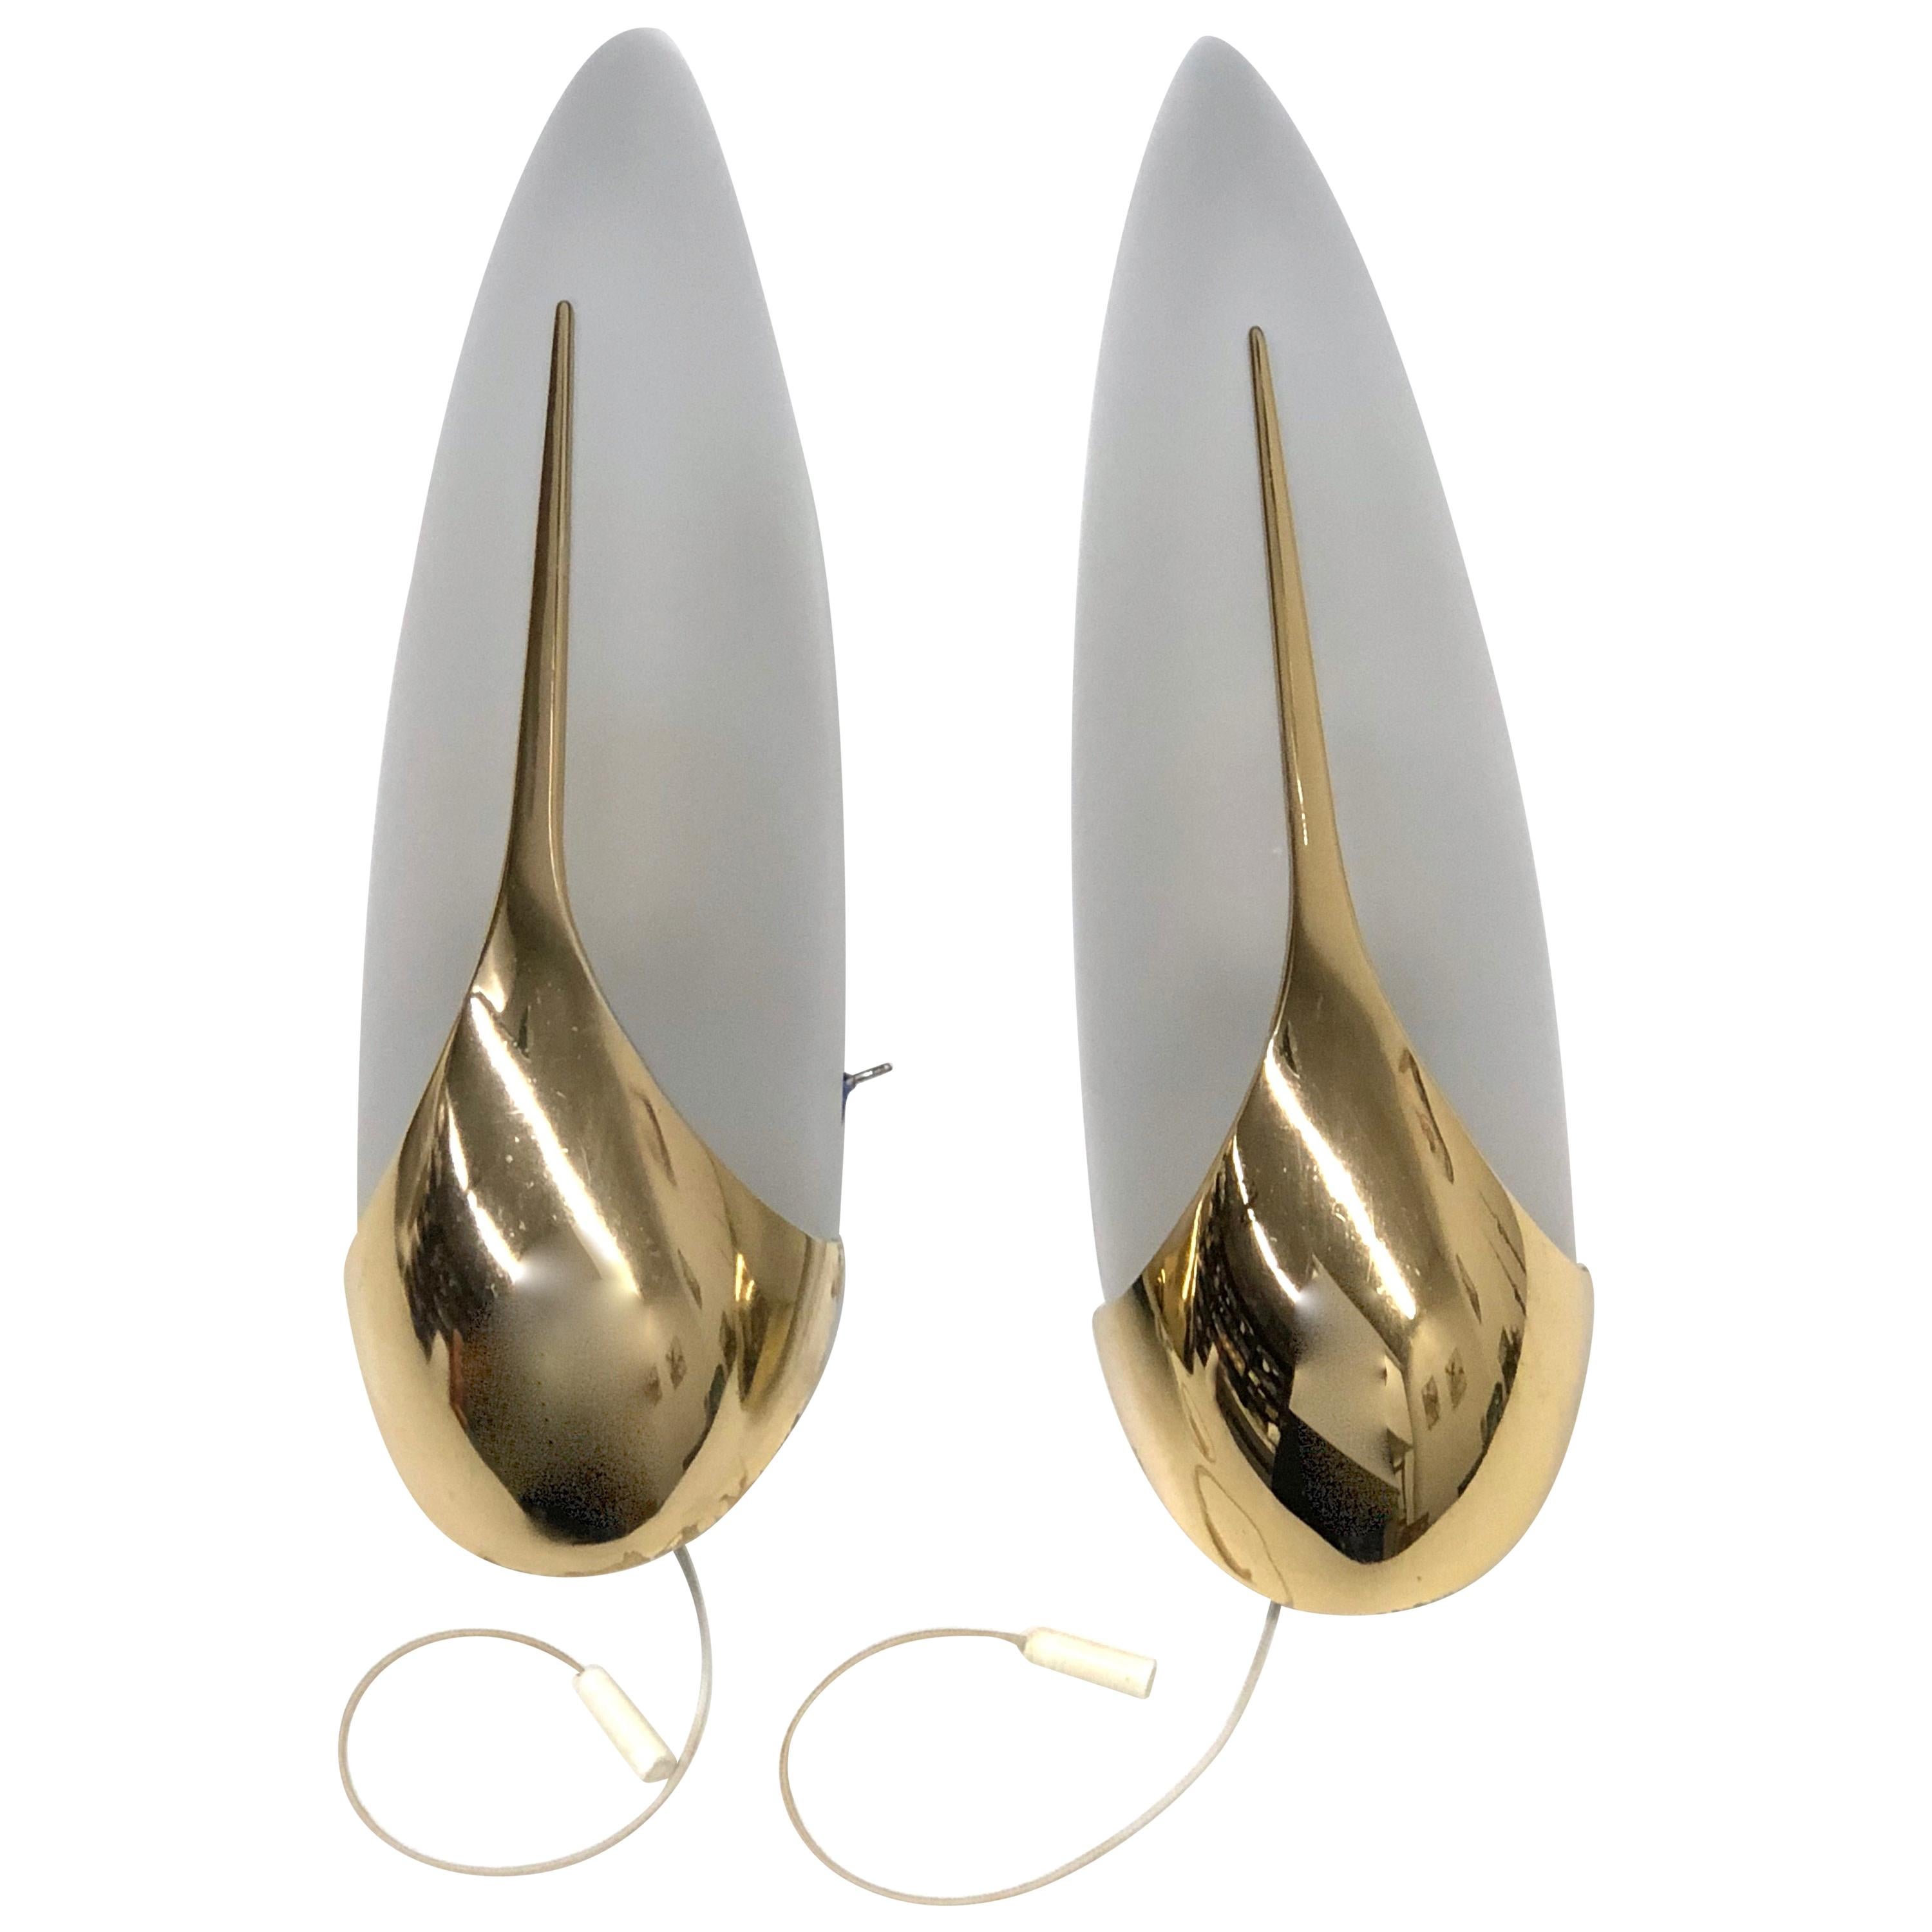 Pair of Art Deco Style Sconces Brass and Satin Glass Vintage, Austria, 1980s